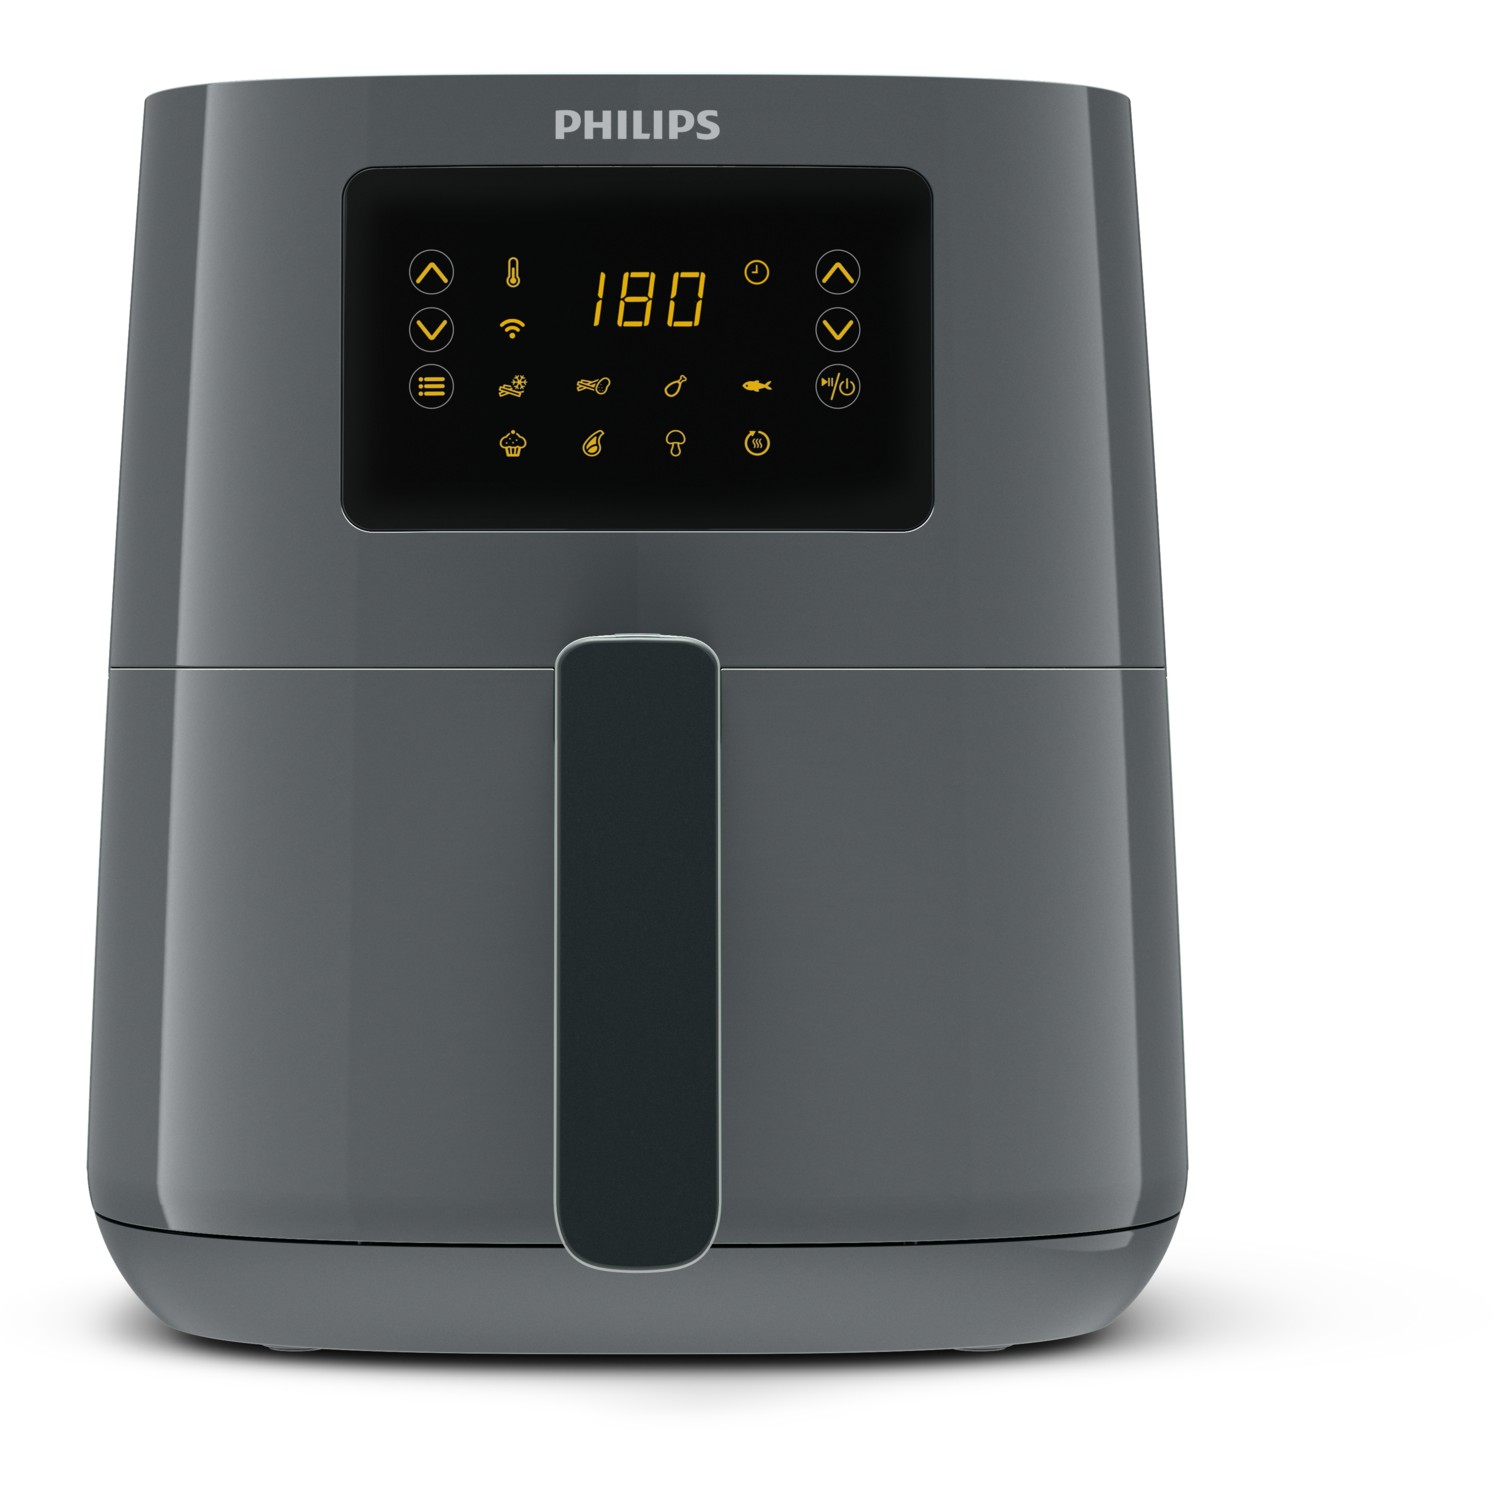 Philips 5000 series HD9255/60 fryer